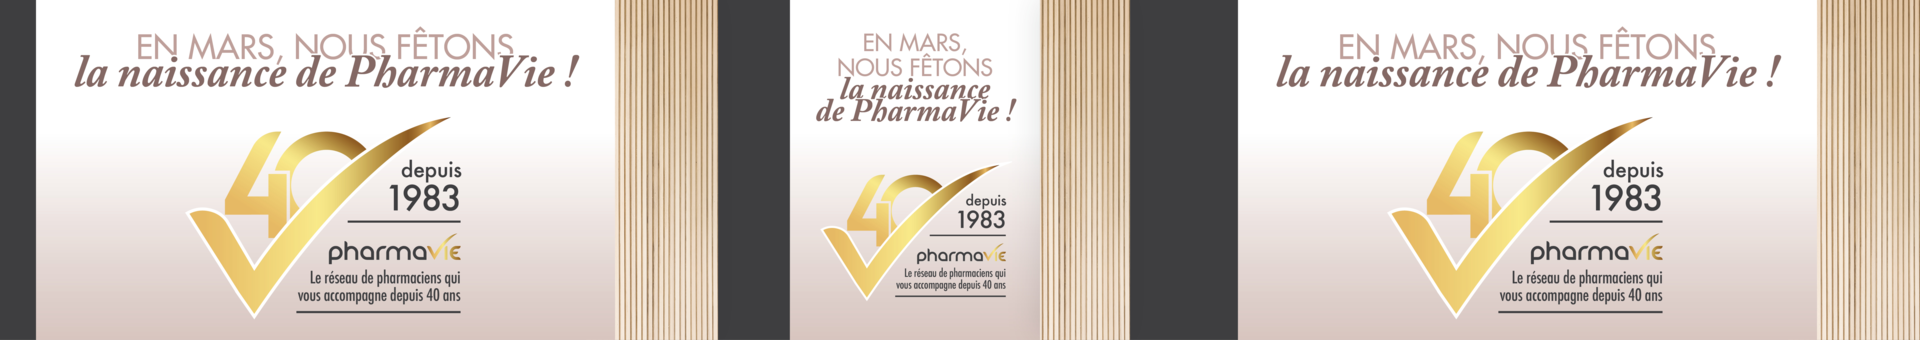 Pharmacie Patton,Saint-Avold